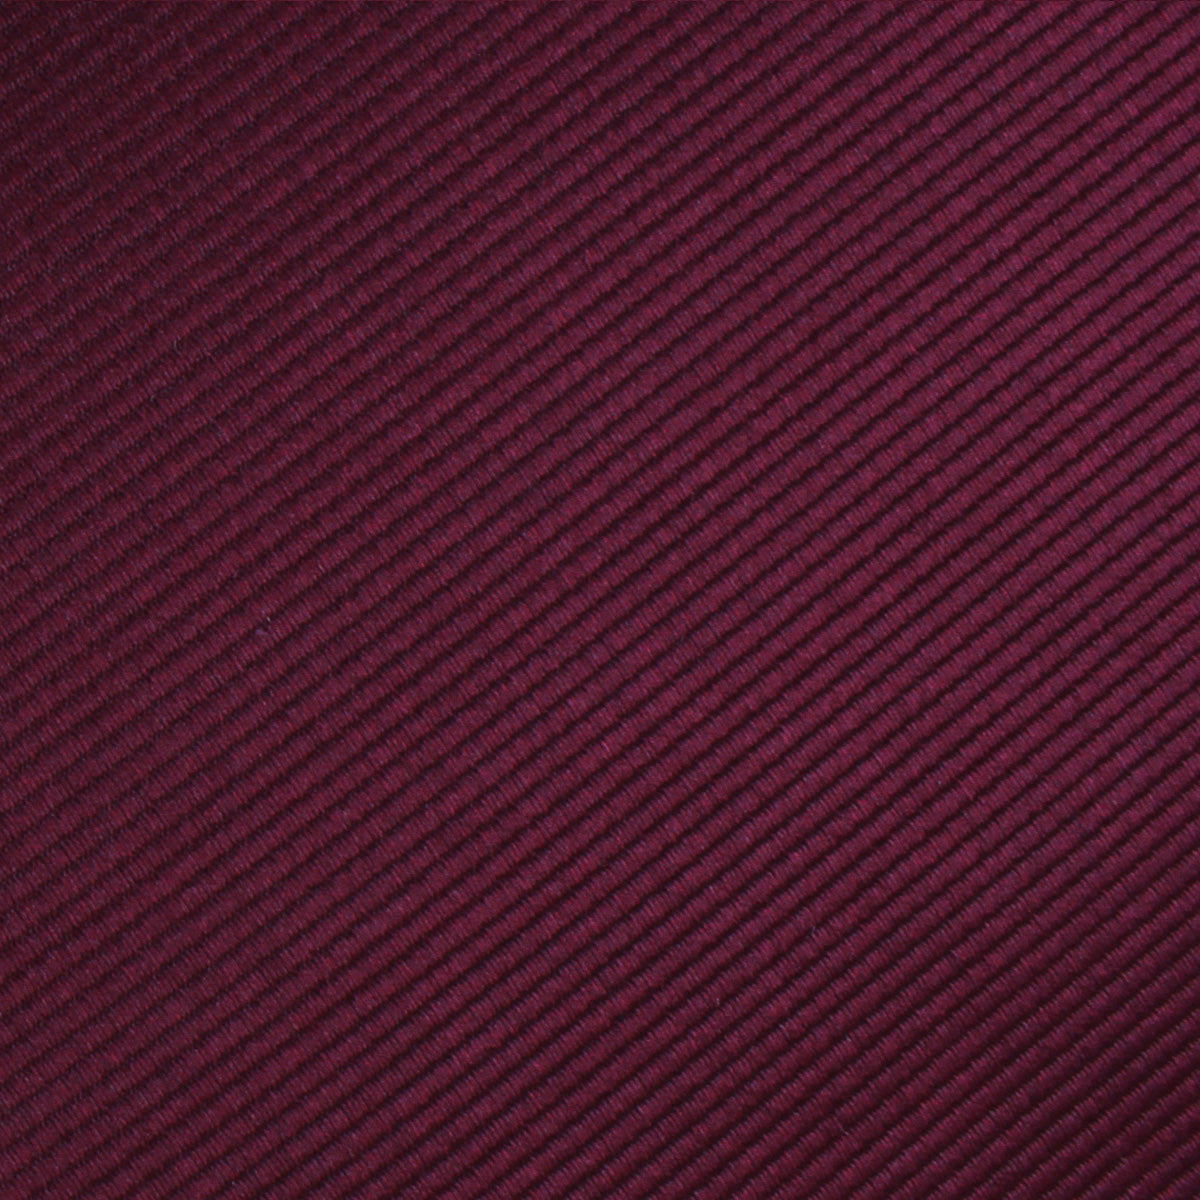 Dark Merlot Wine Twill Pocket Square Fabric